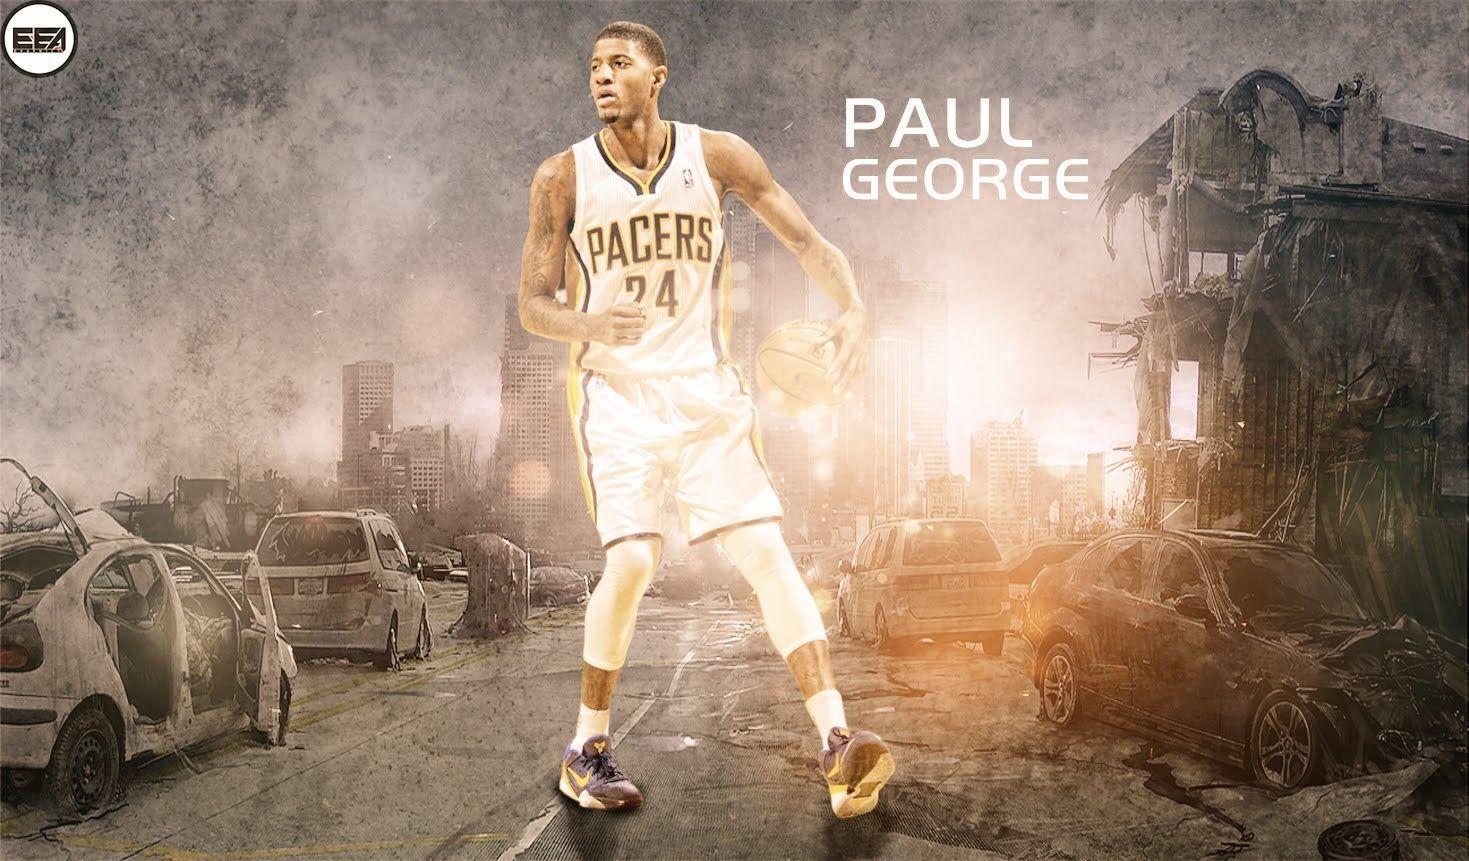 Paul George Mix